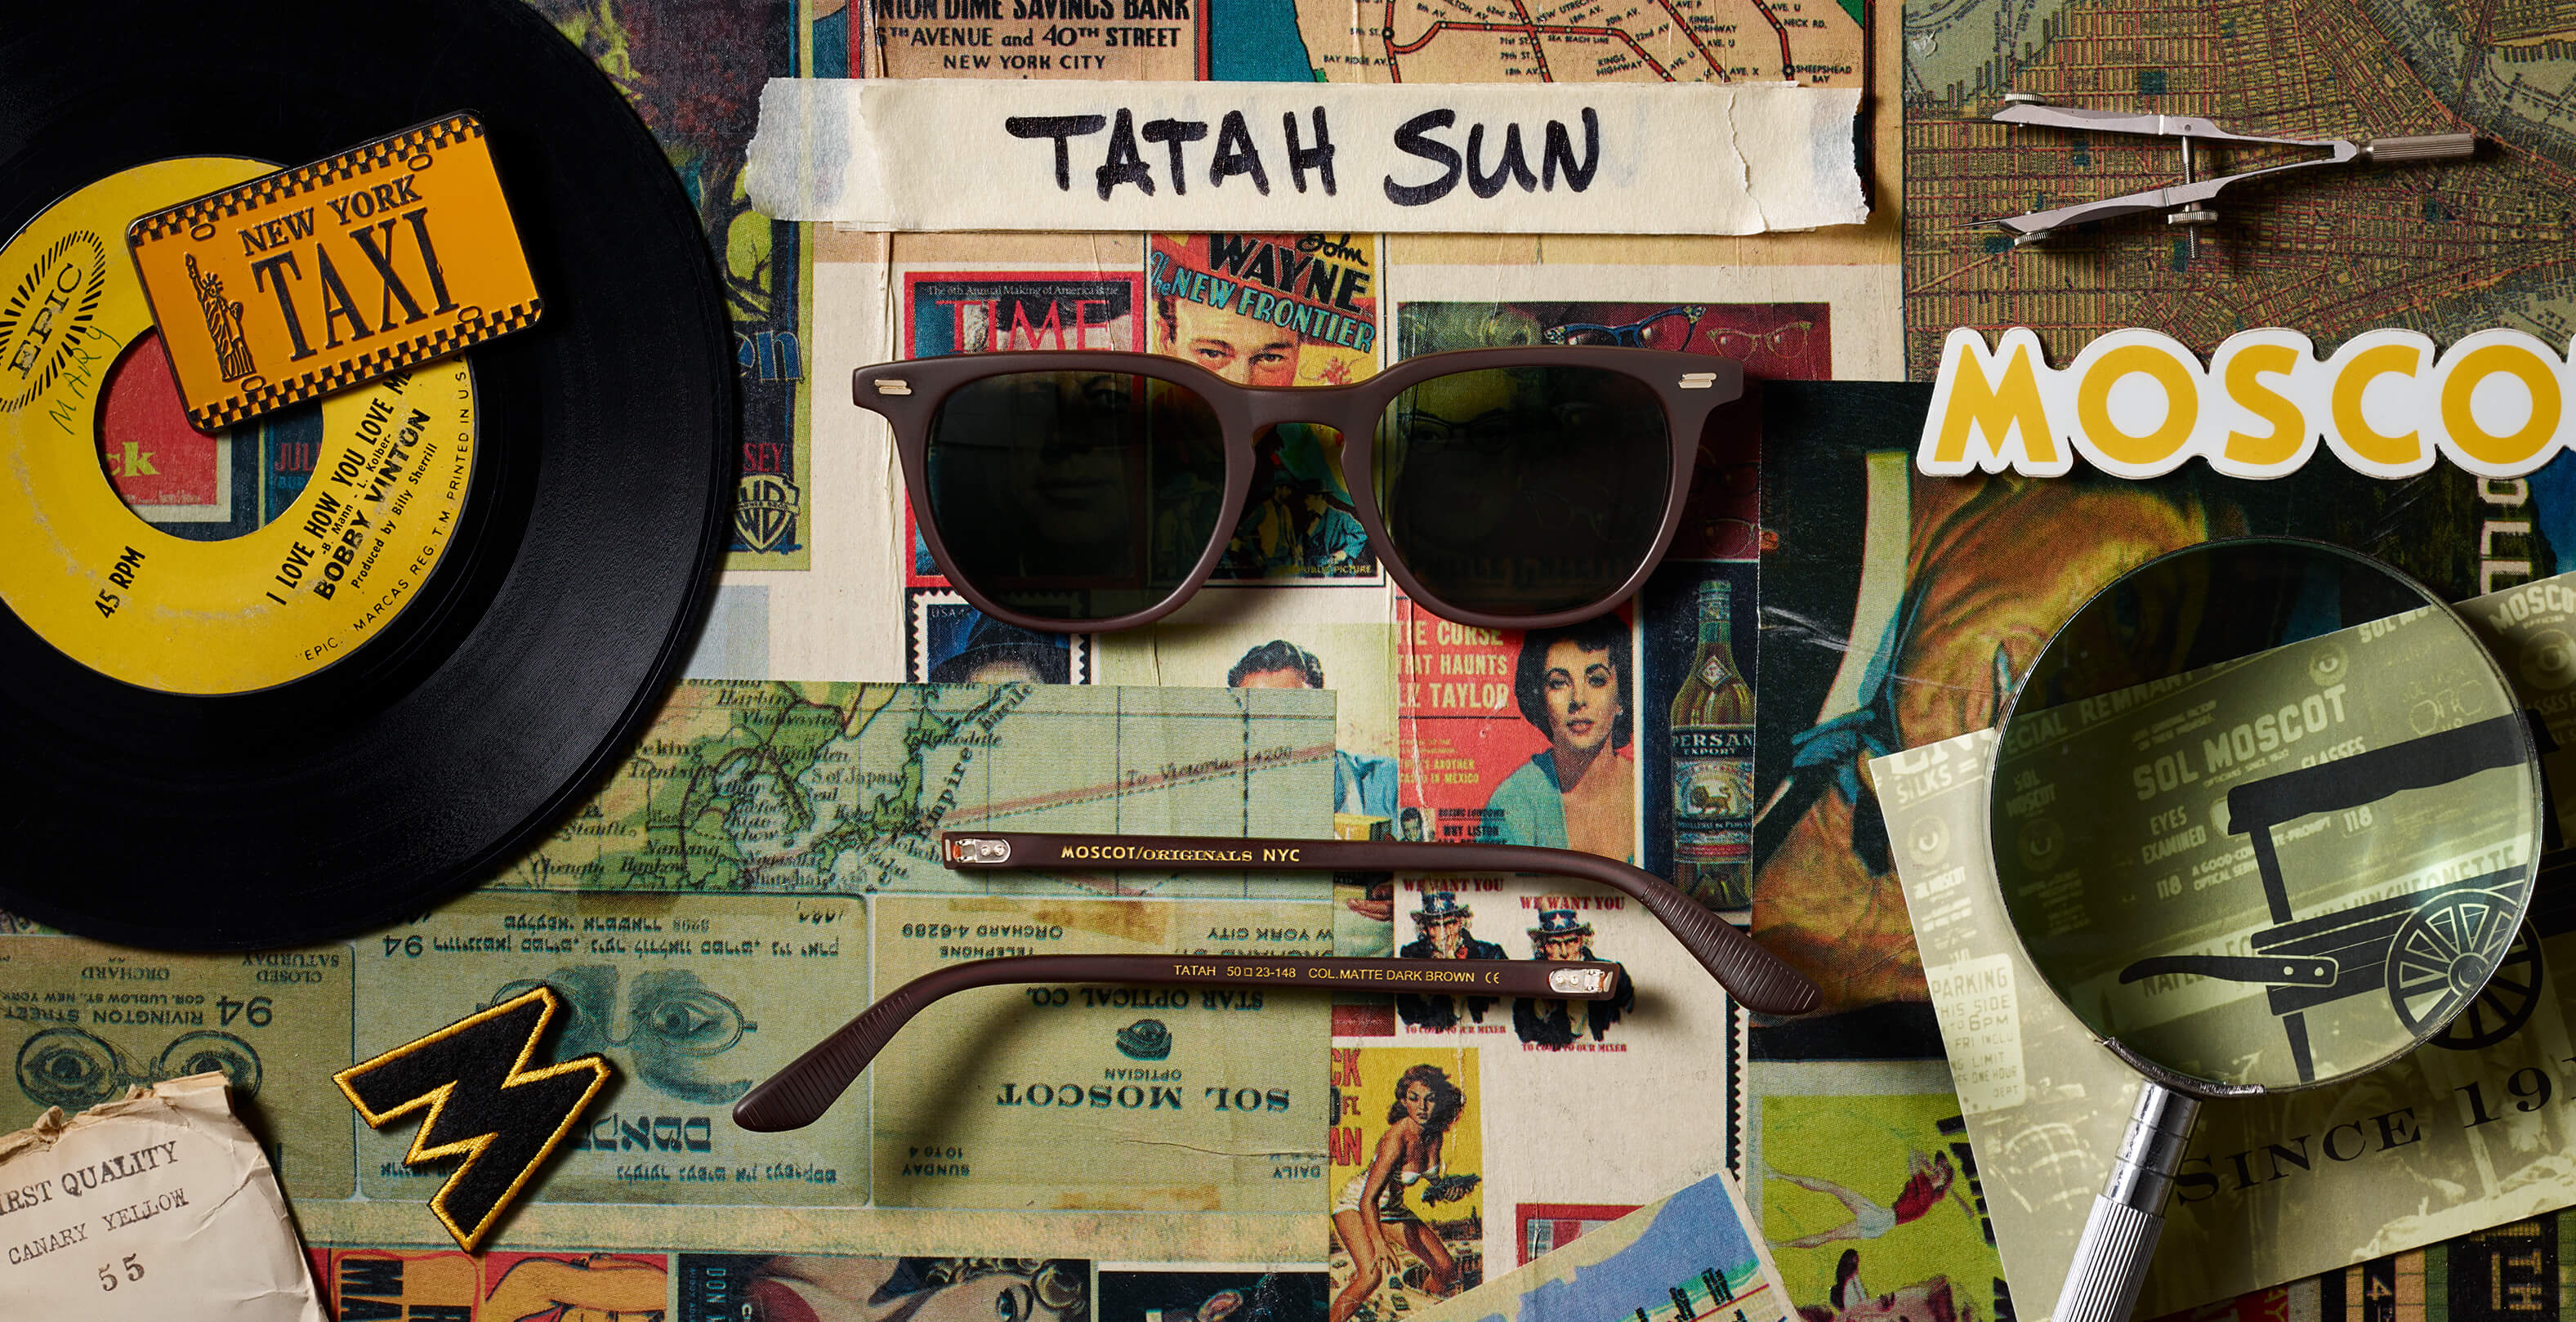 The TATAH SUN